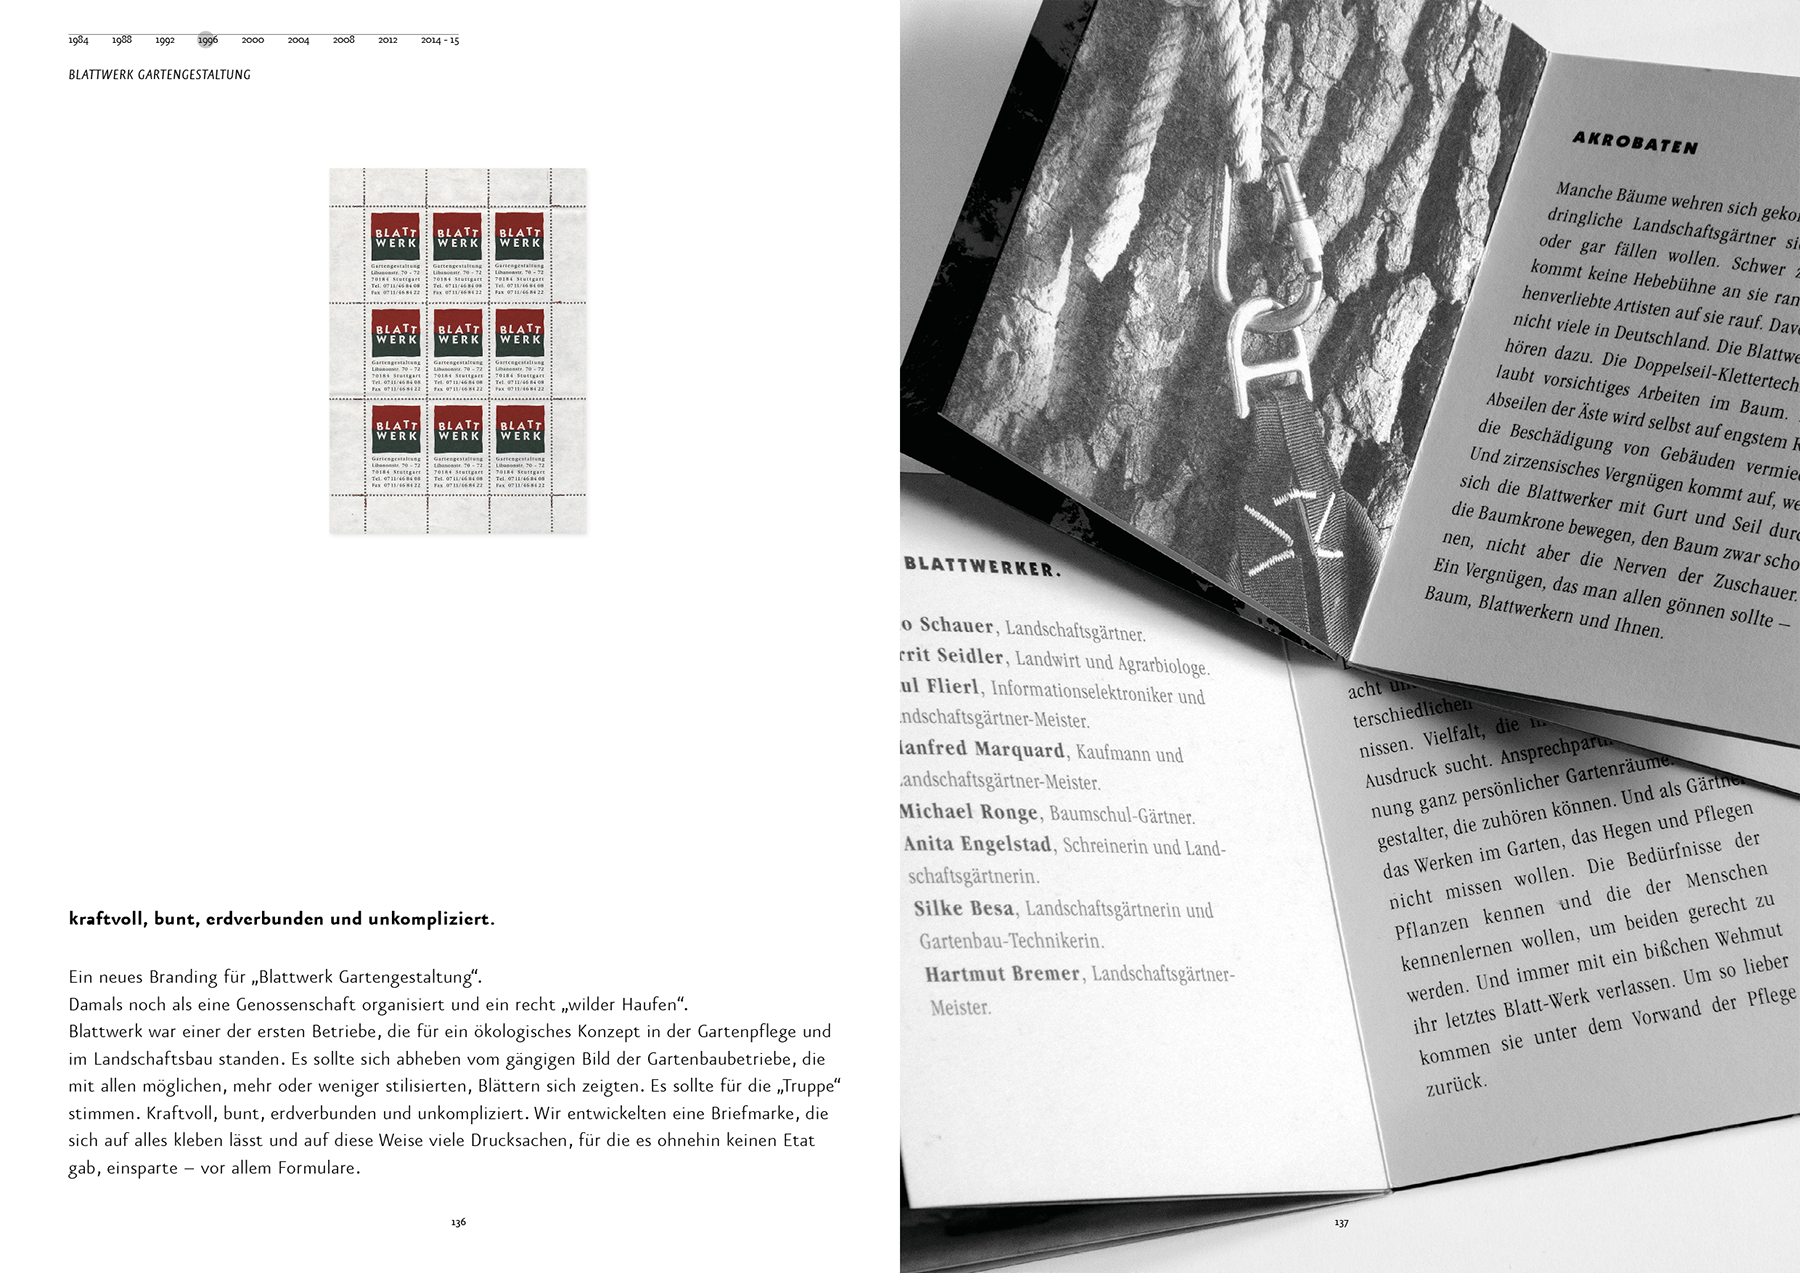 sabine-mescher-sichtung-designbilderbuch-corporatedesign-gartenbaubetrieb.png